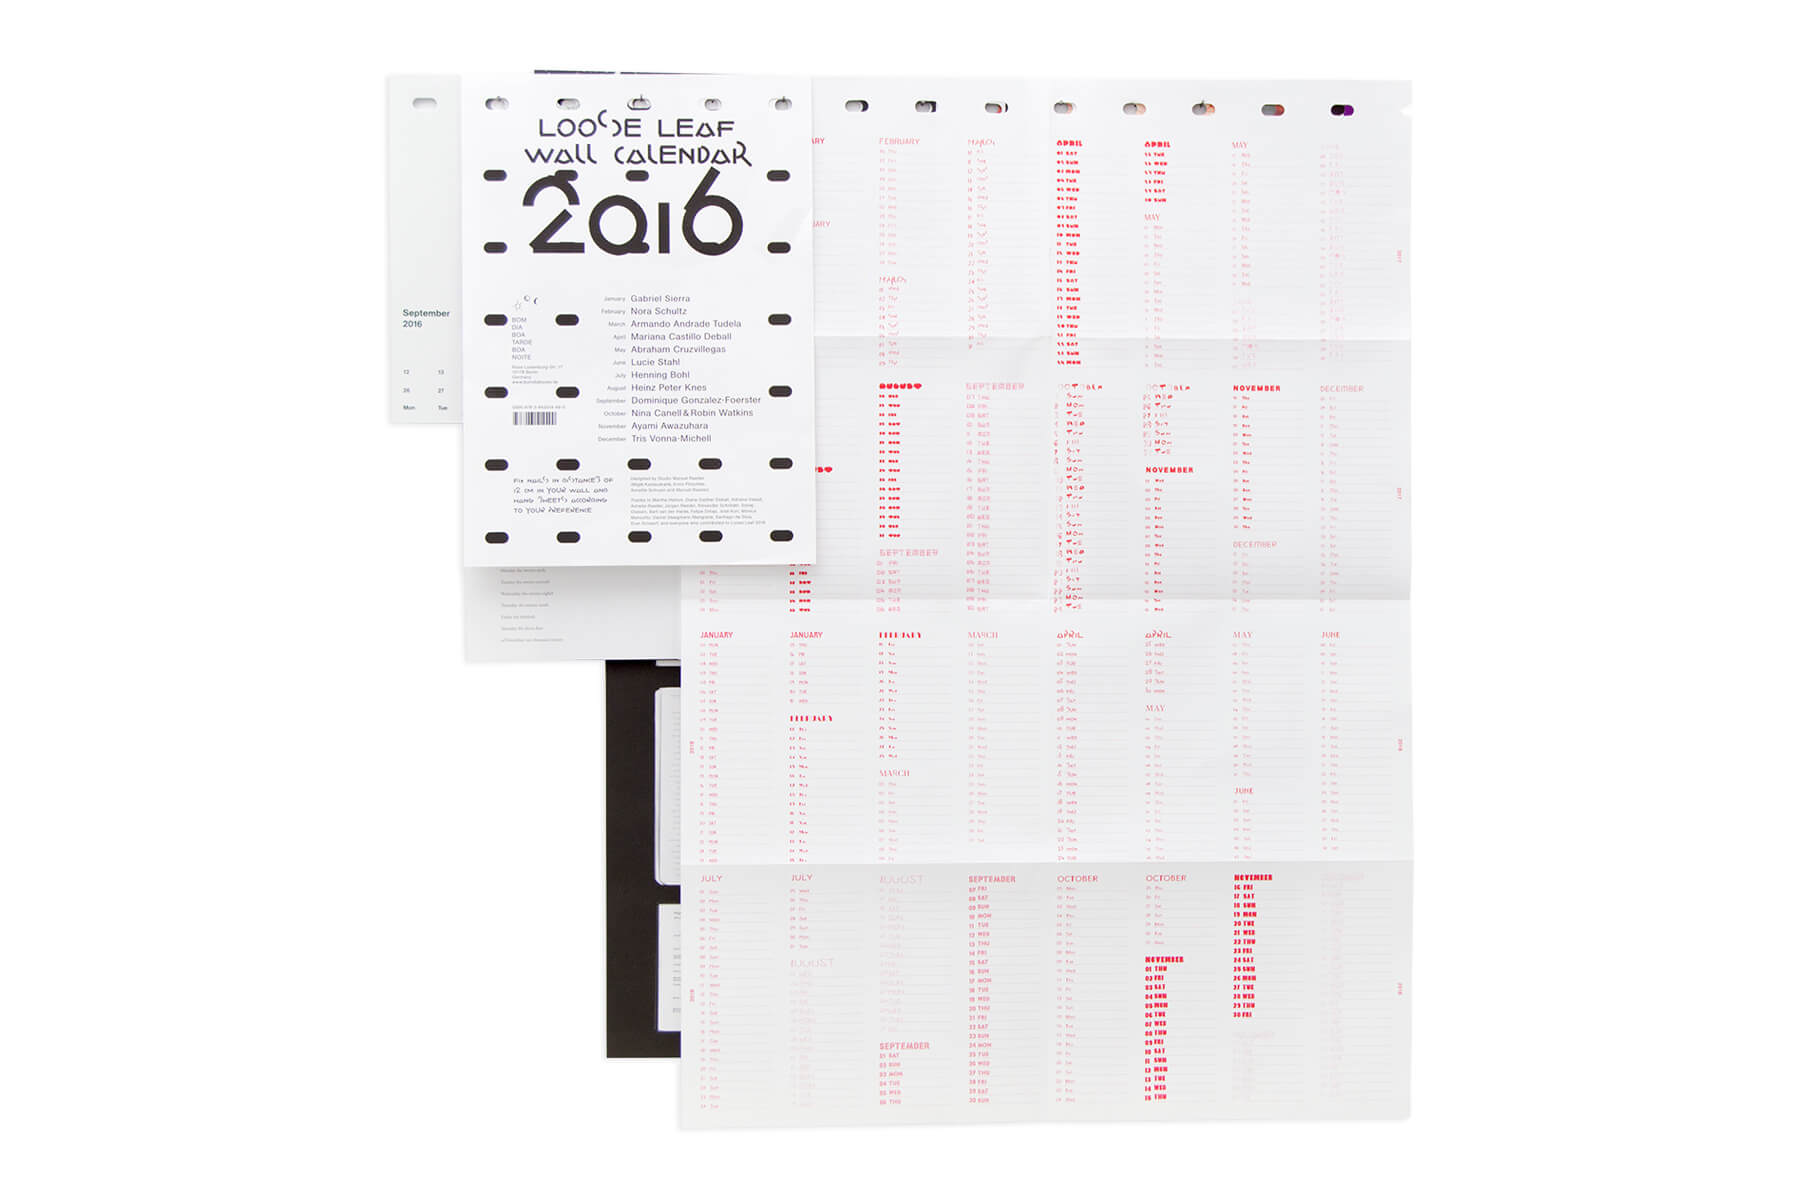 Product image of Loose Leaf Wall Calendar 2016